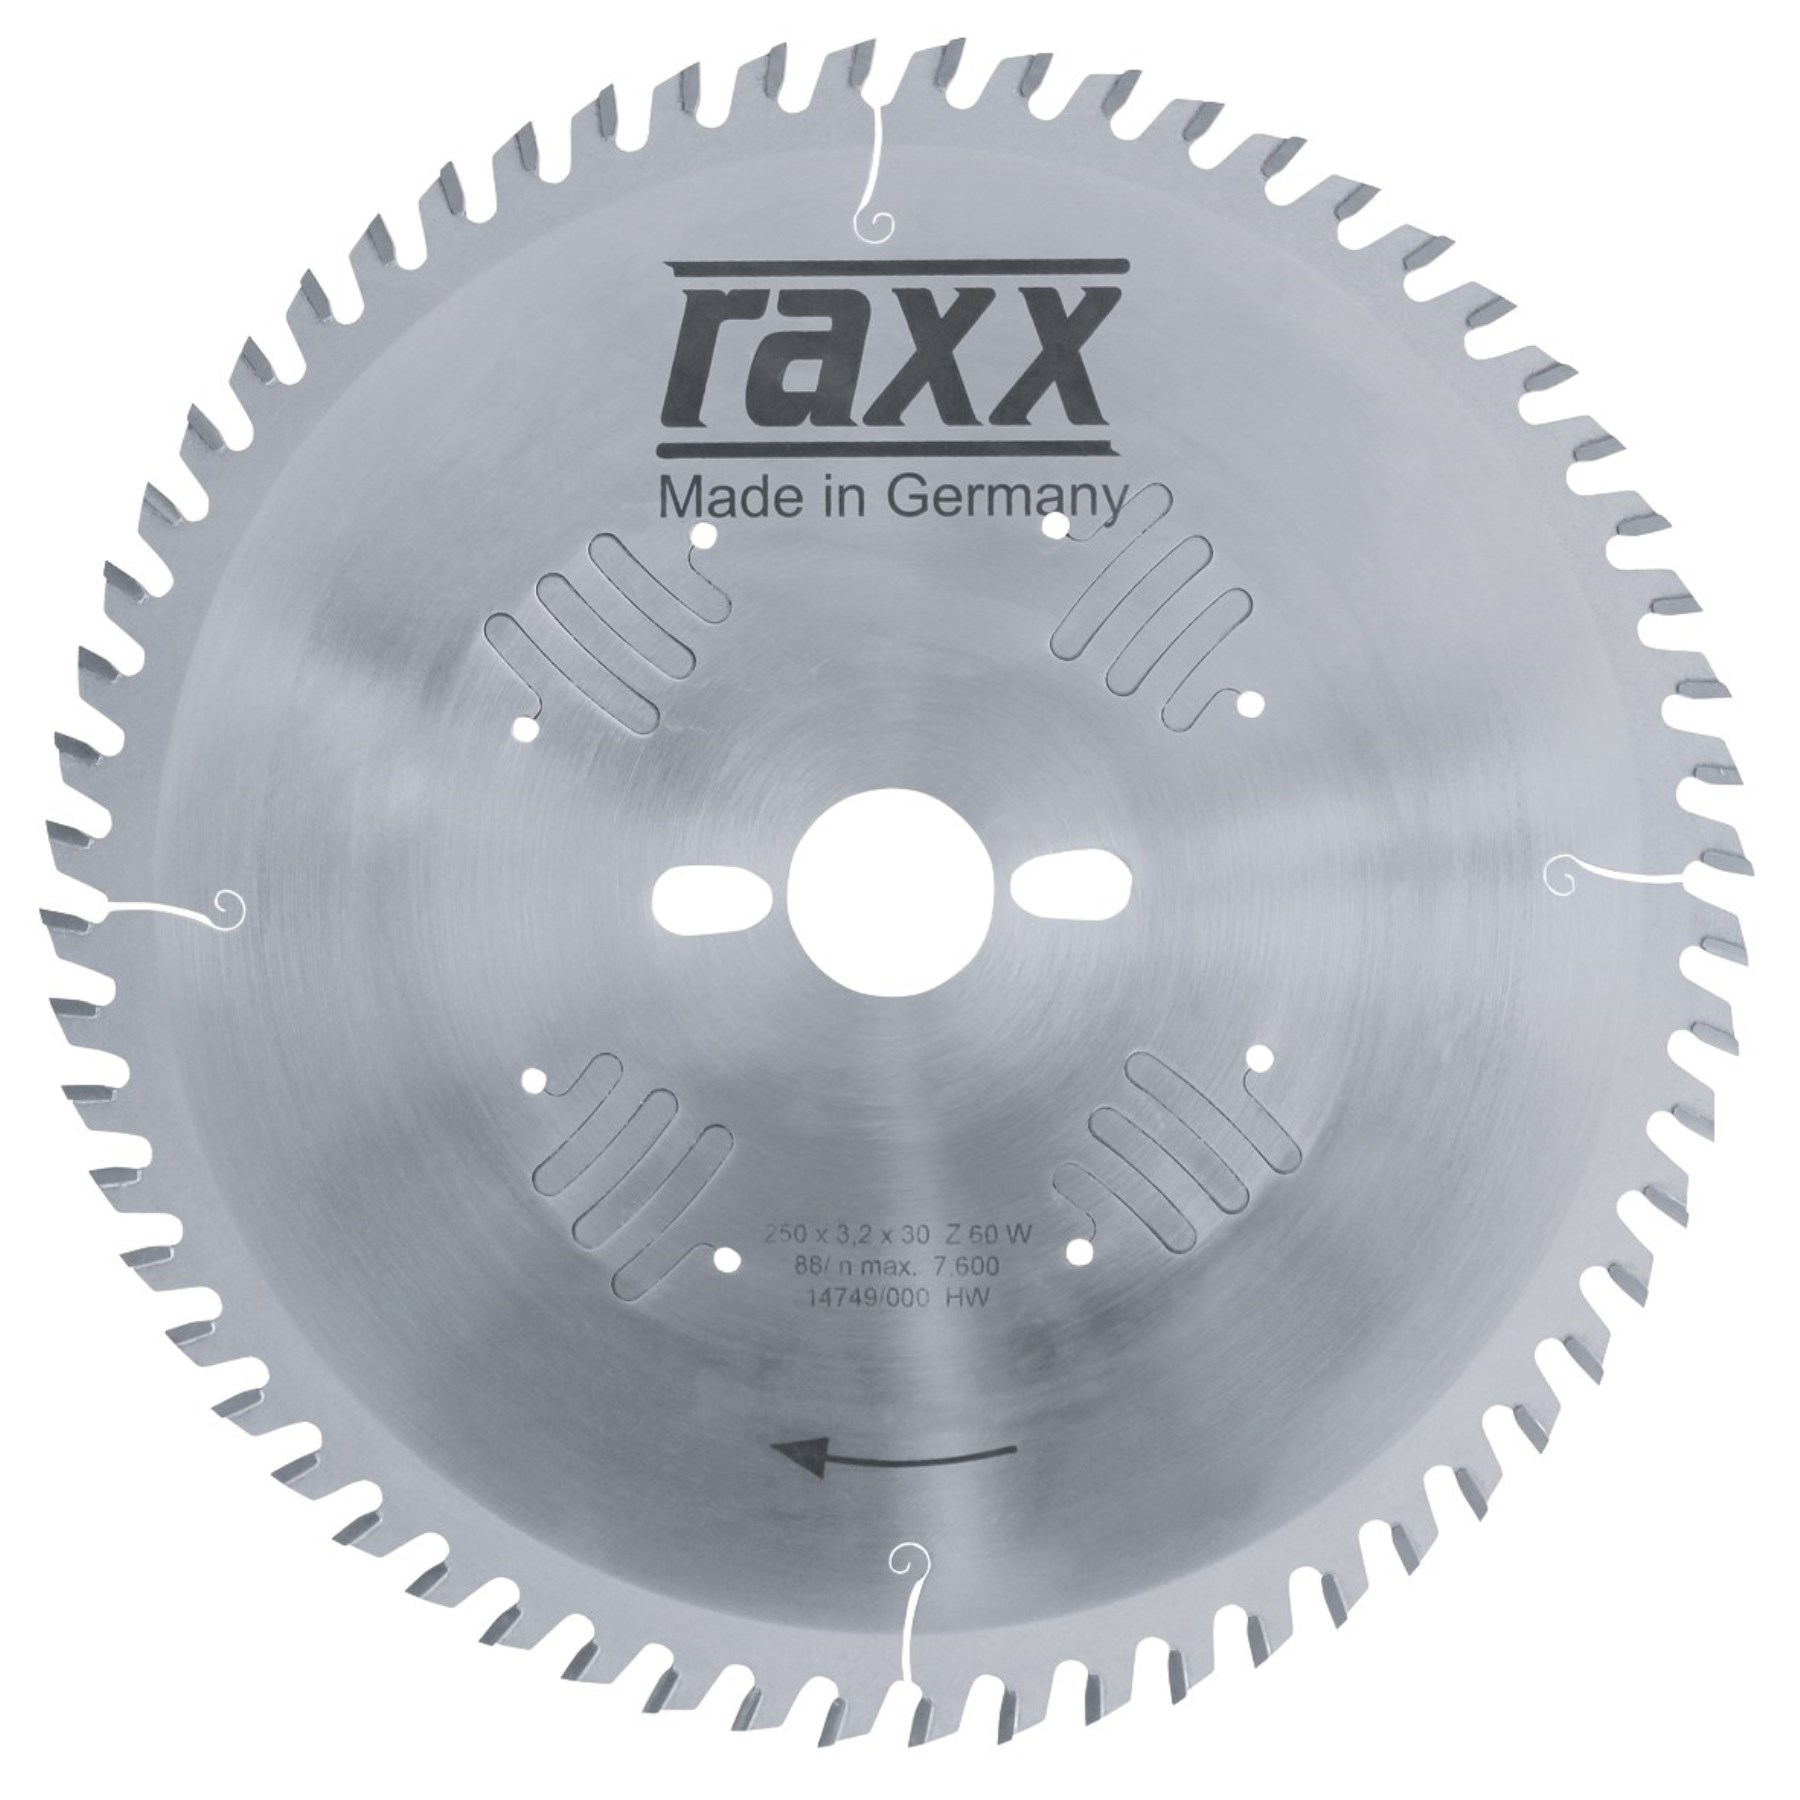 RAXX 1205072 kotouč k okružní pile HM 400x3,5x30 [ 55400300960060400 ]